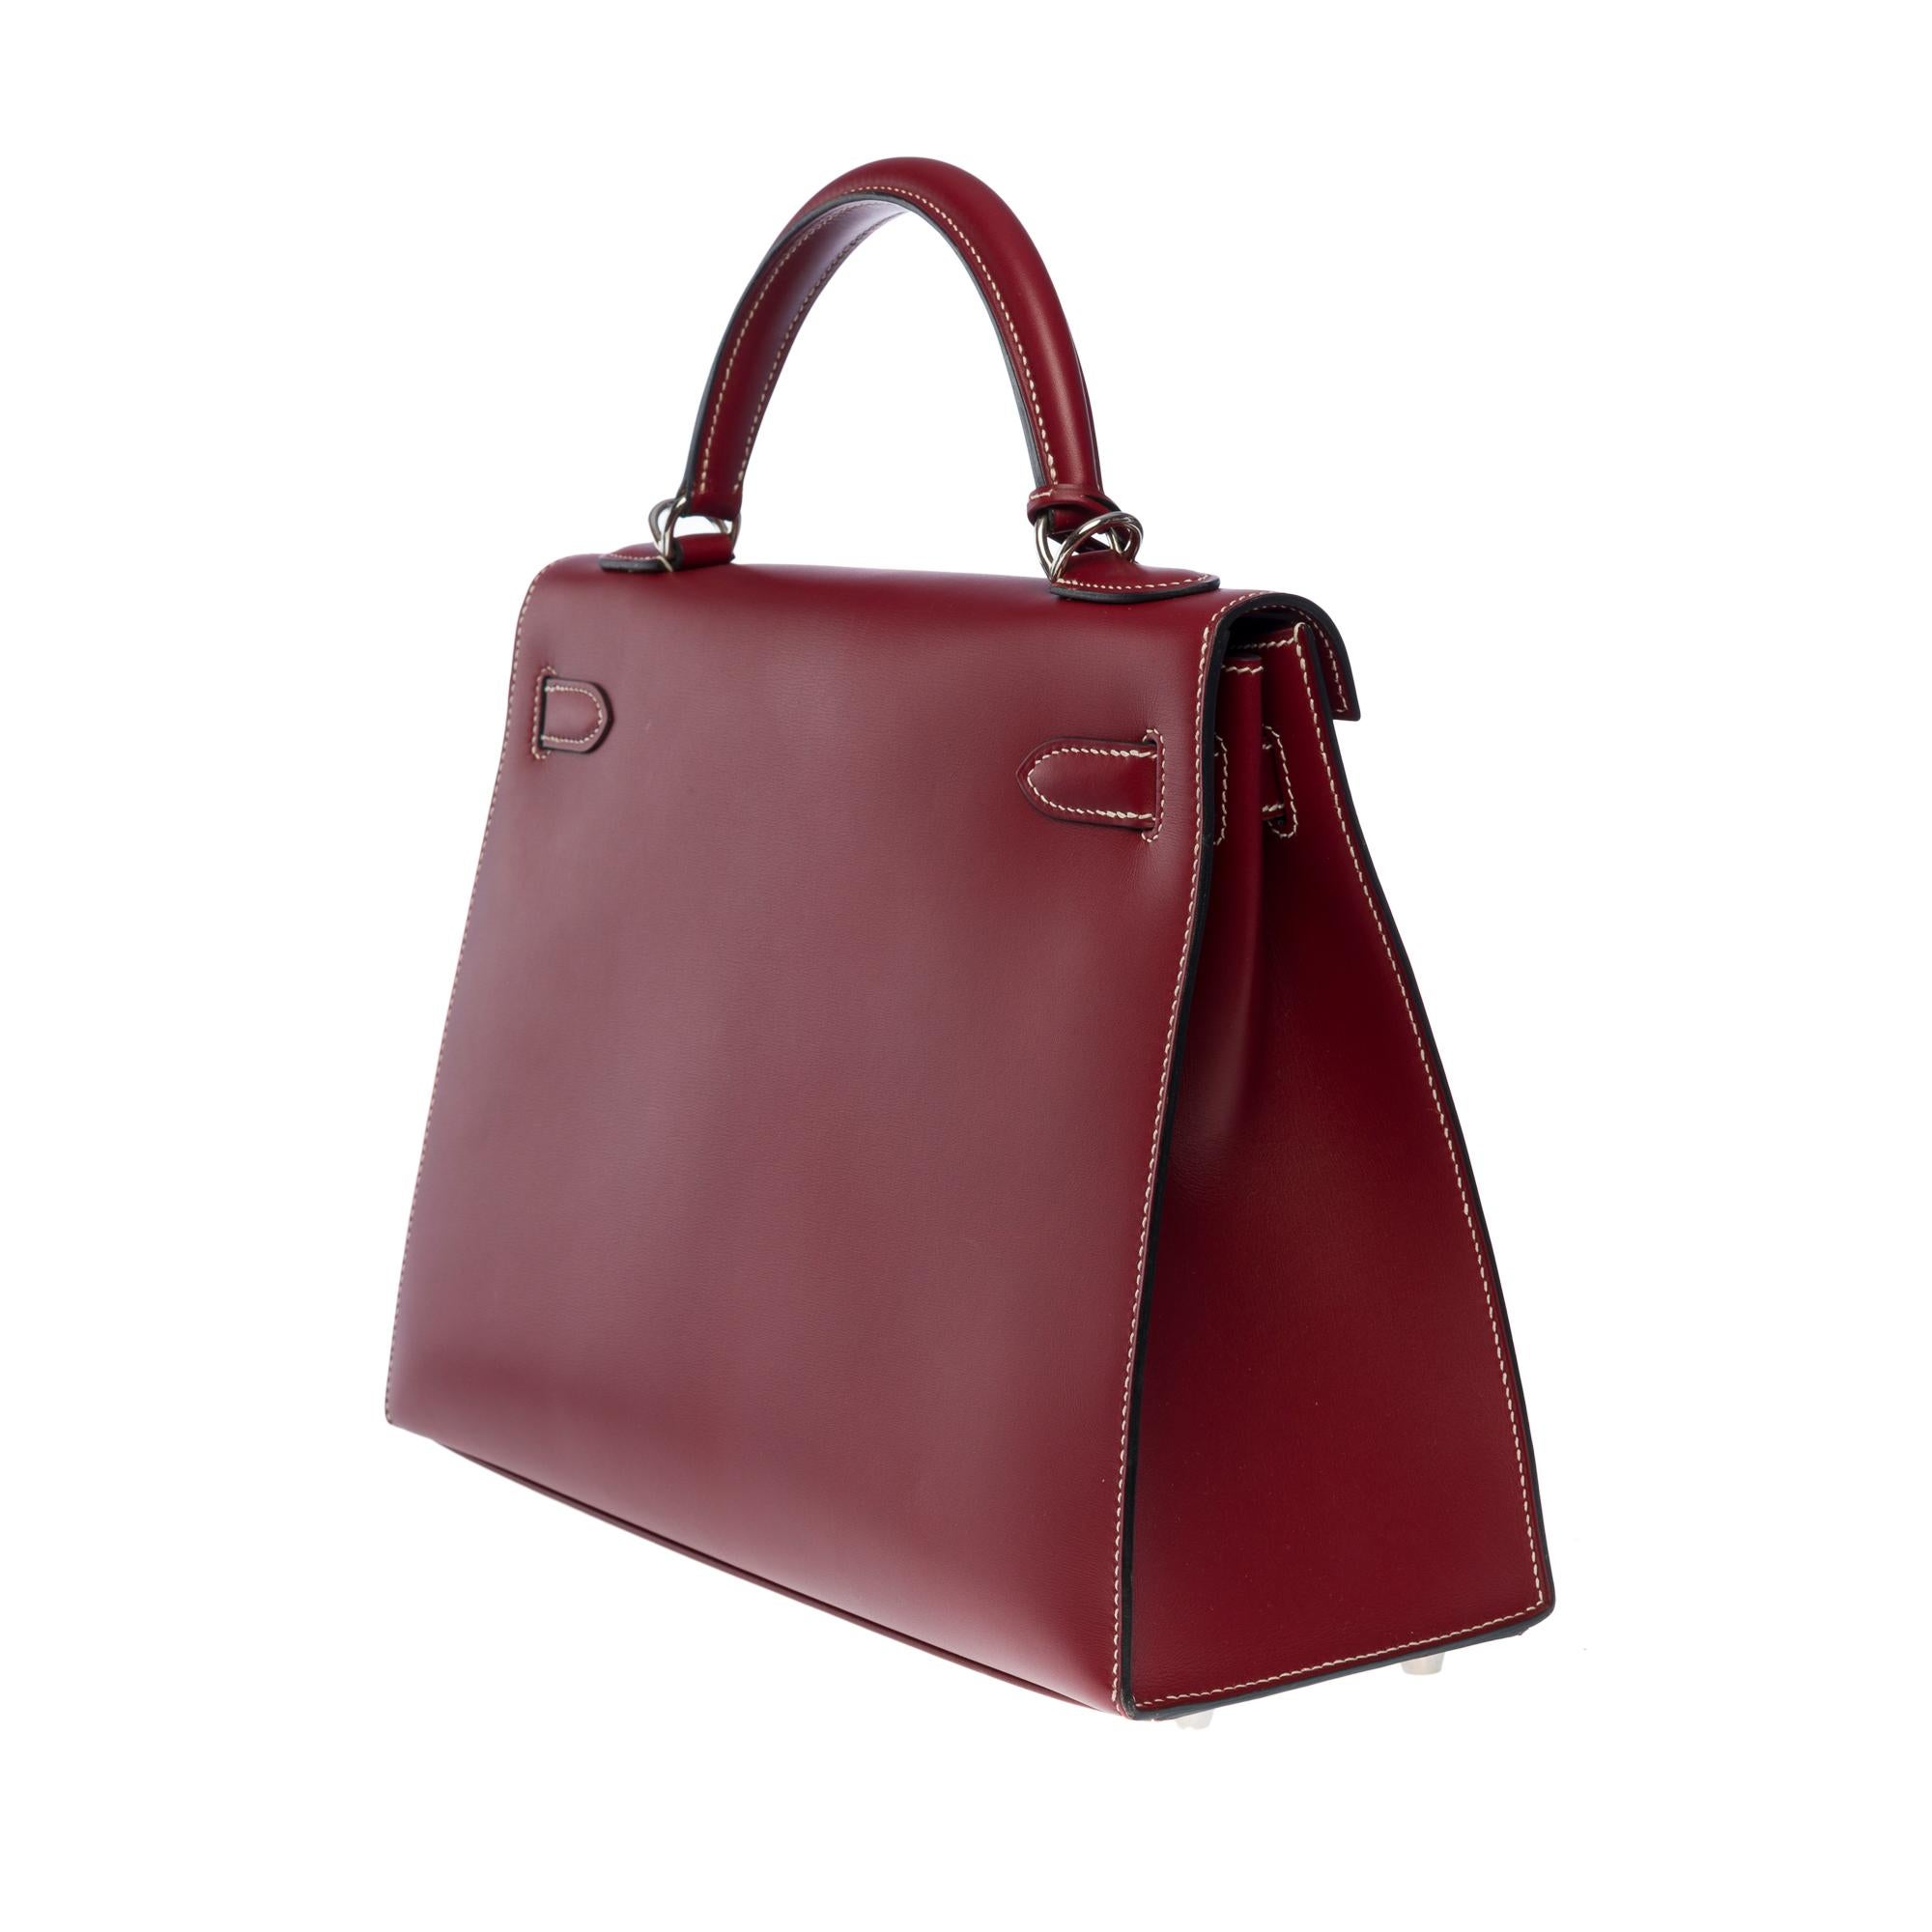 Women's Very Rare Hermès Kelly 32 sellier handbag strap in Rouge H Chamonix leather, SHW